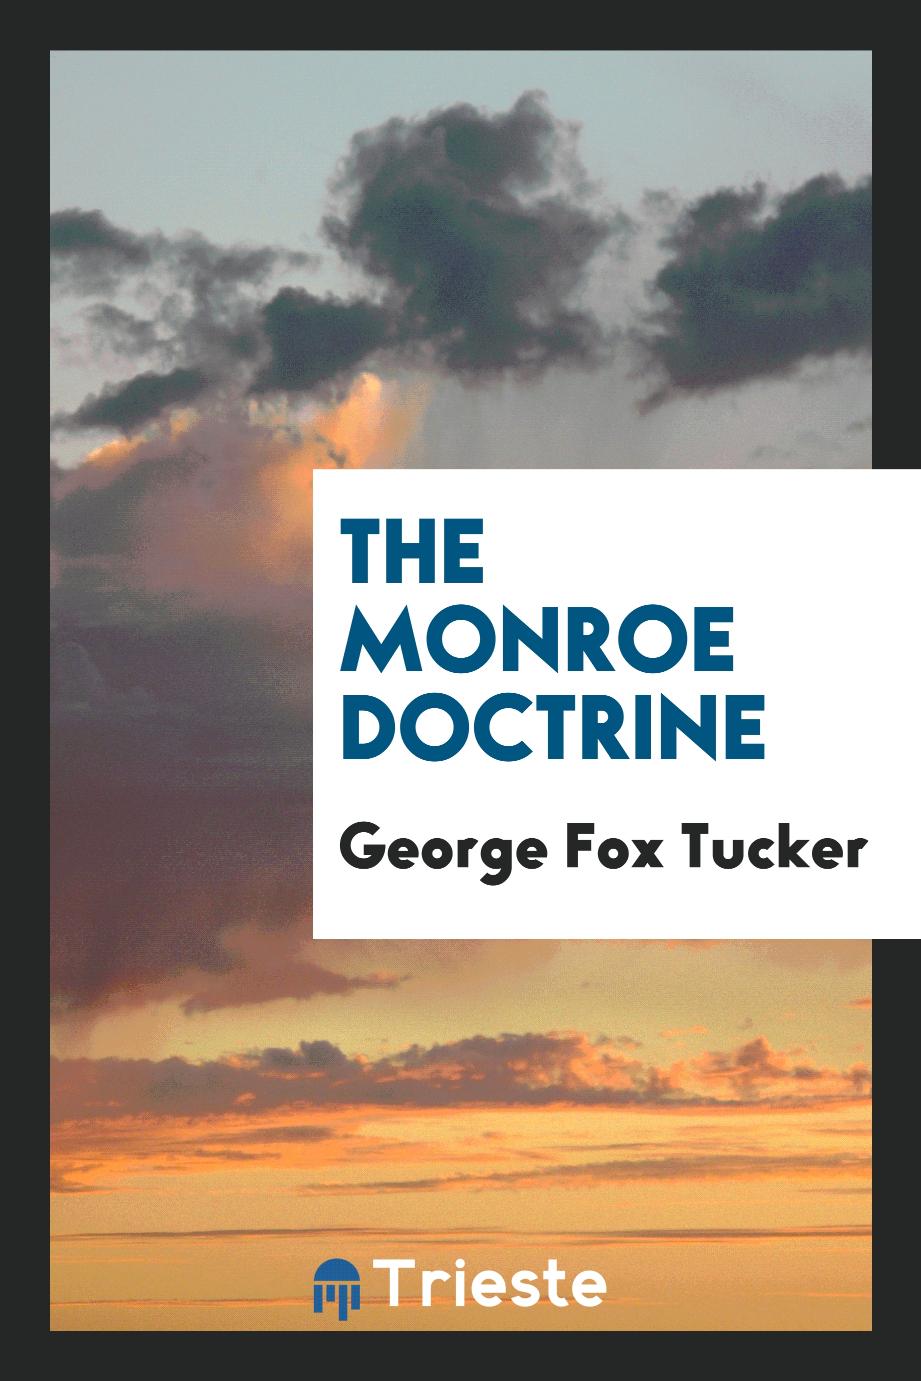 The Monroe doctrine